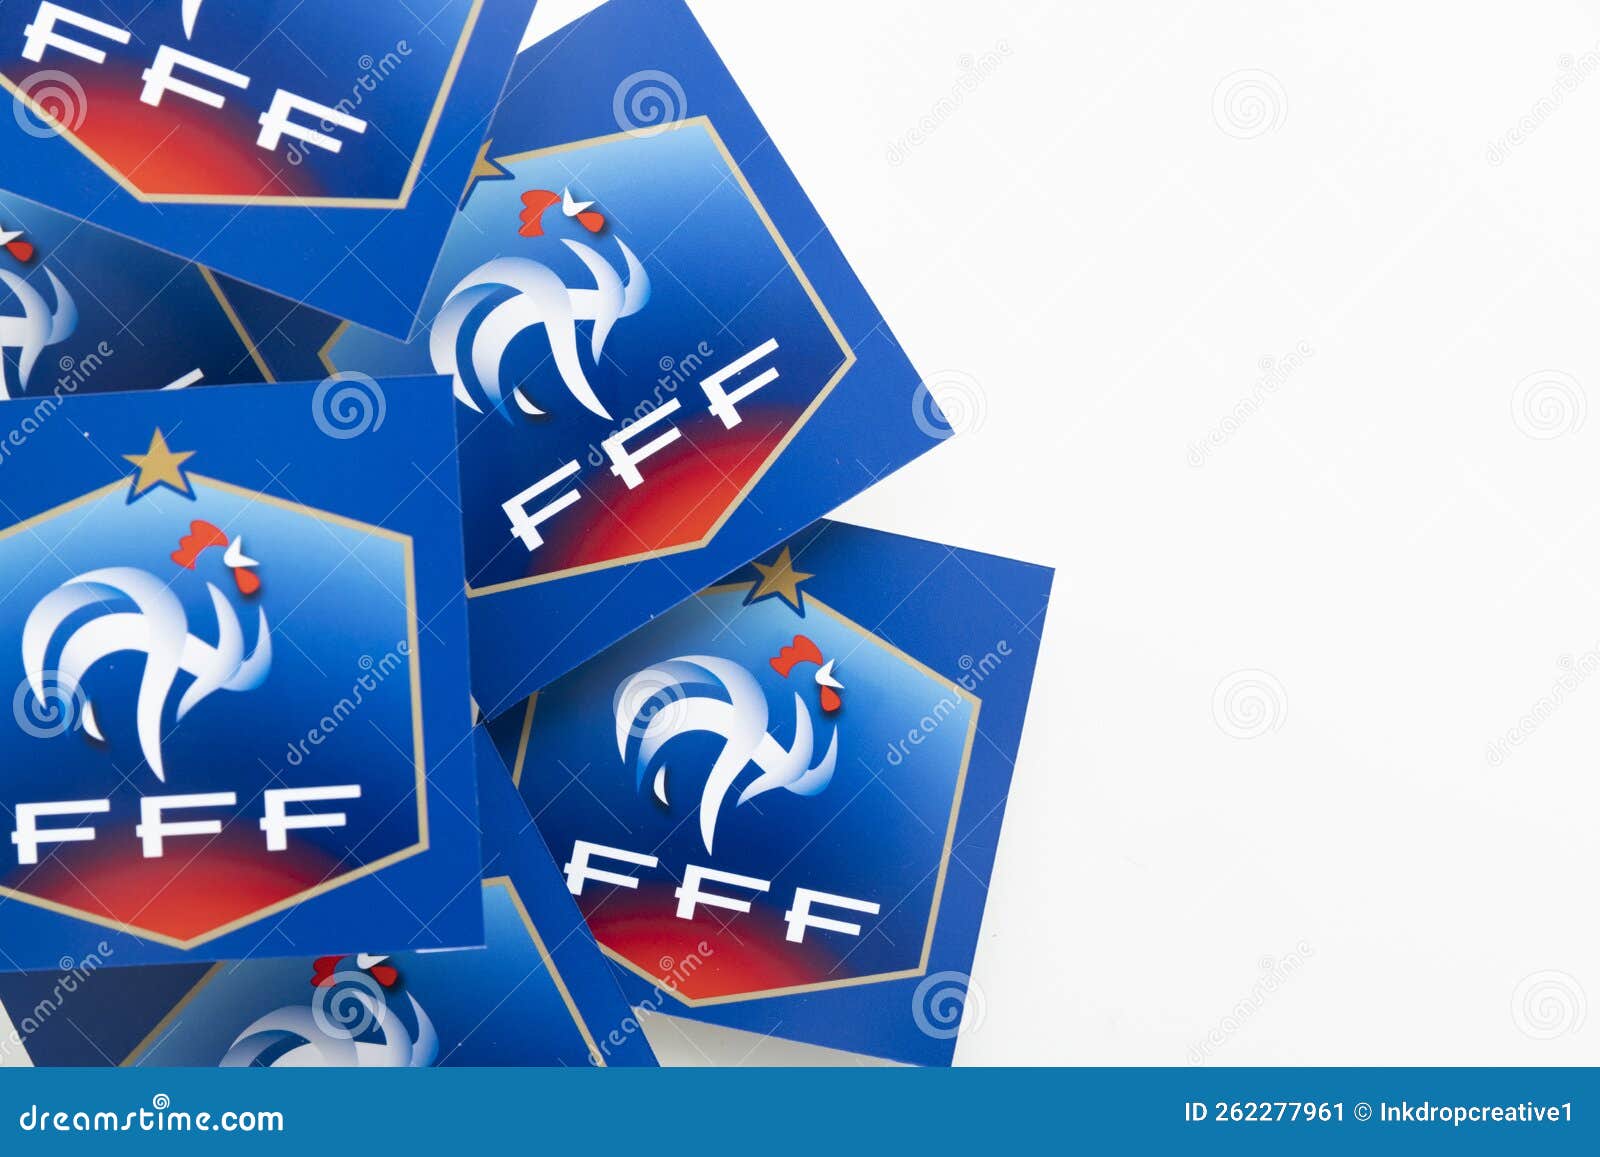 France Football Team Logo Neon Sign Light Worlld Cup Holiday Decoration  17"x12" | eBay